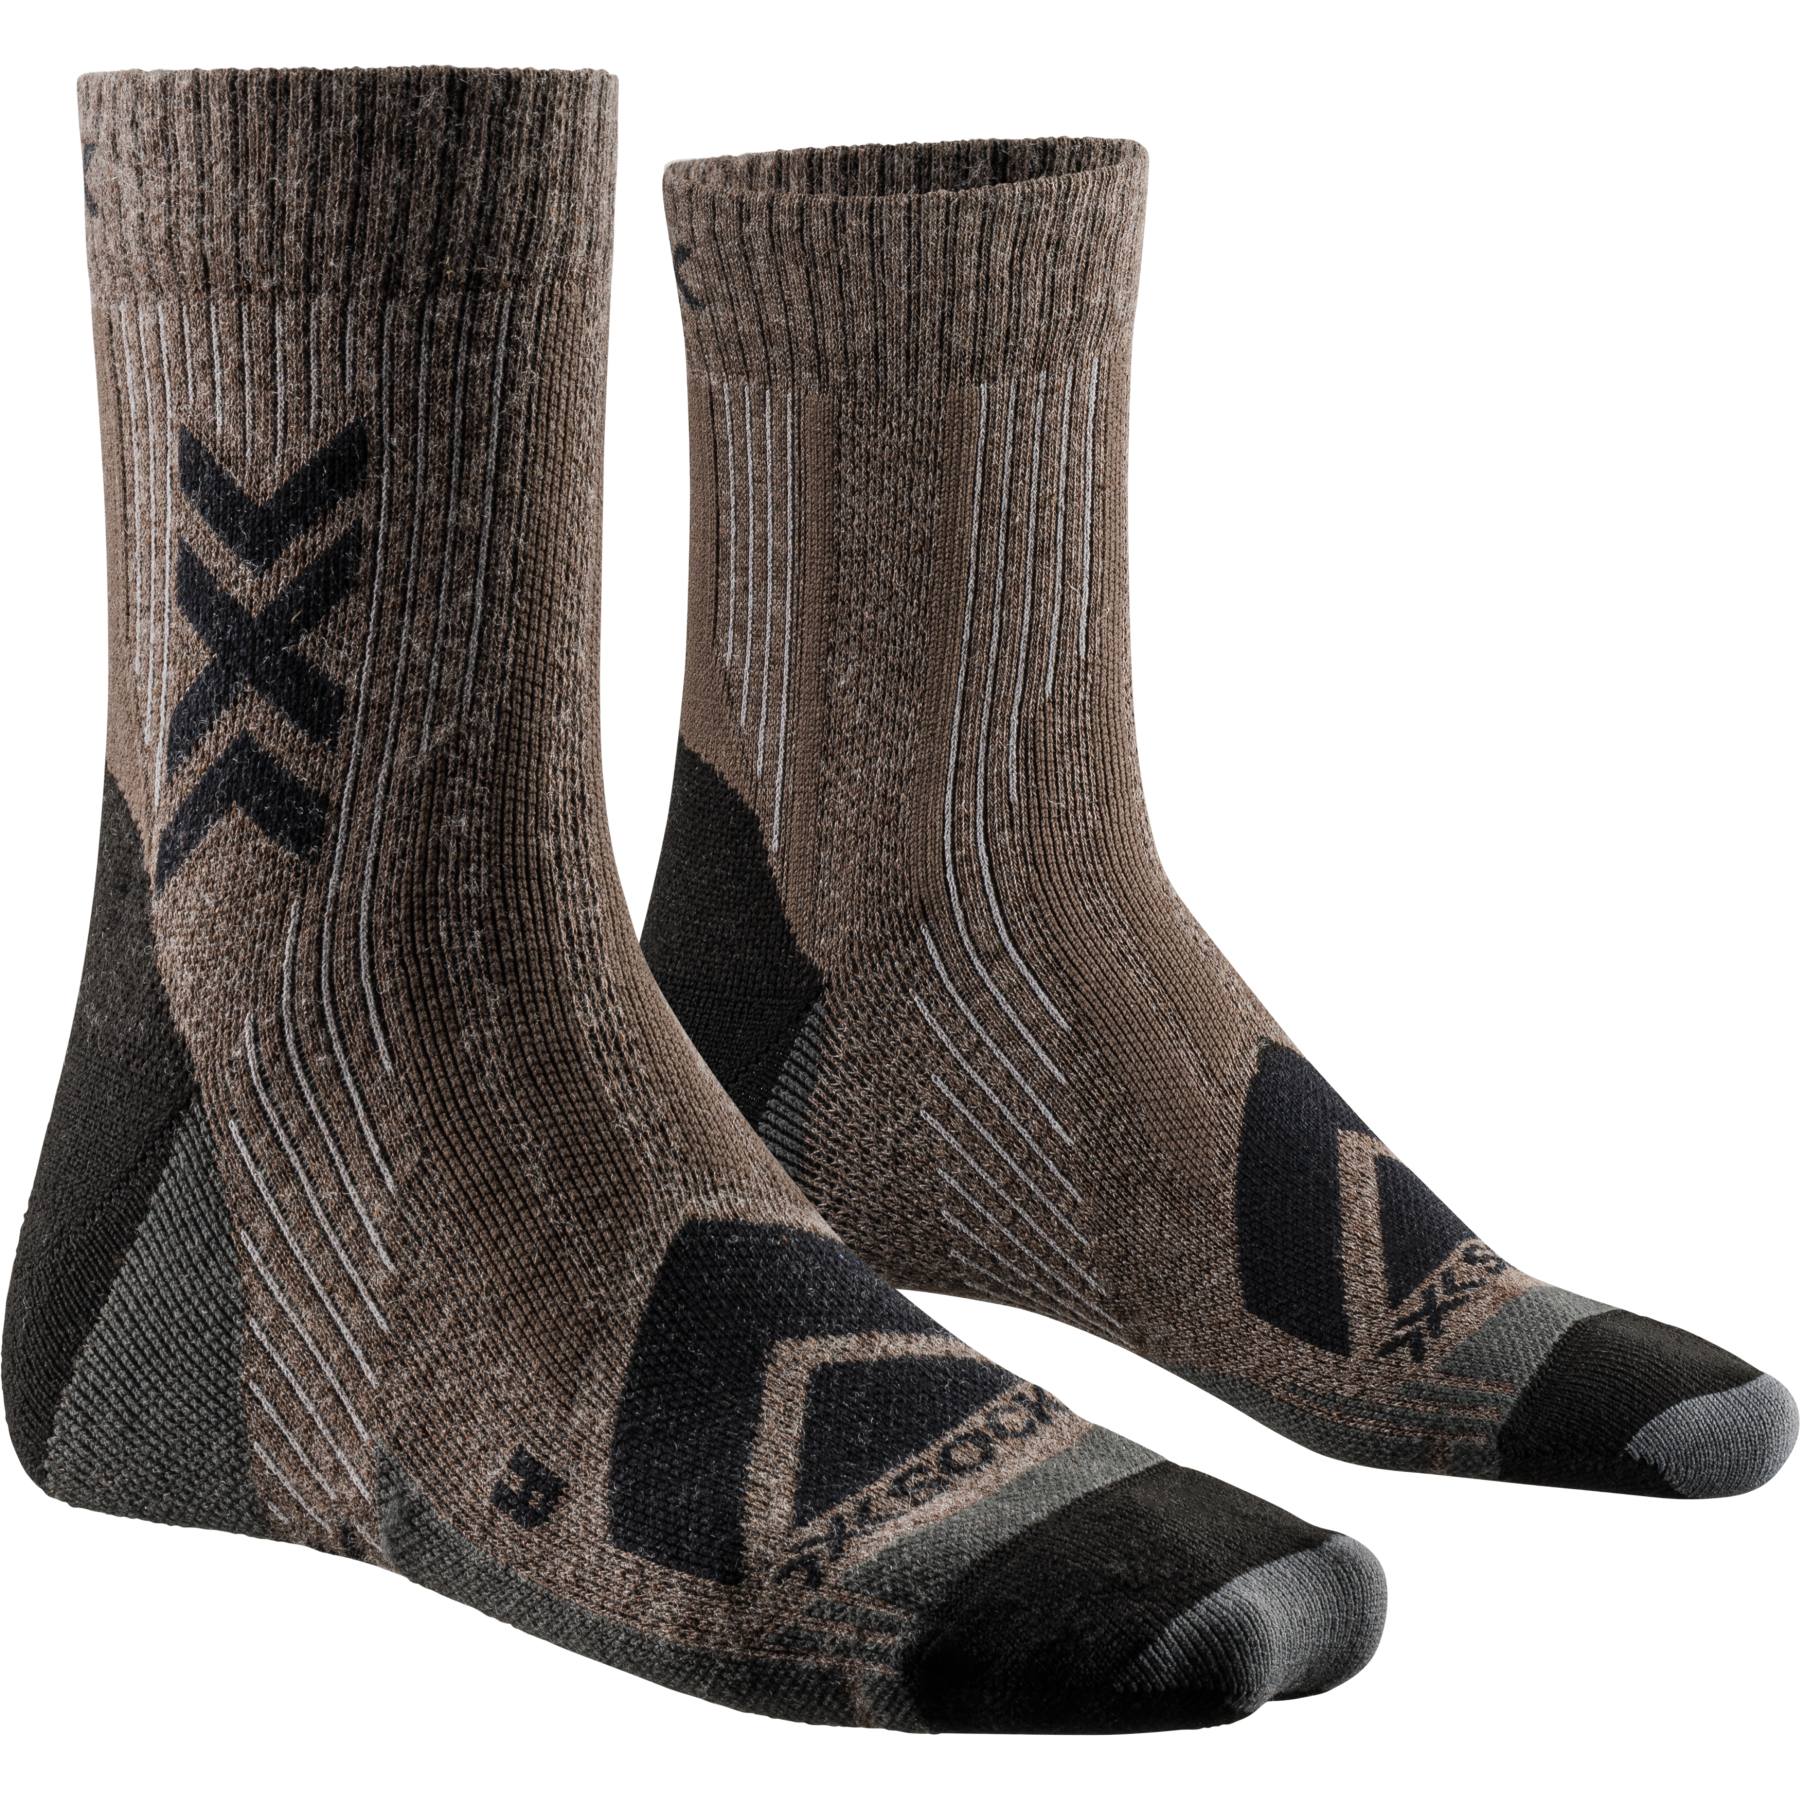 Produktbild von X-Socks Hike Perform Merino Ankle Socks - brown/black